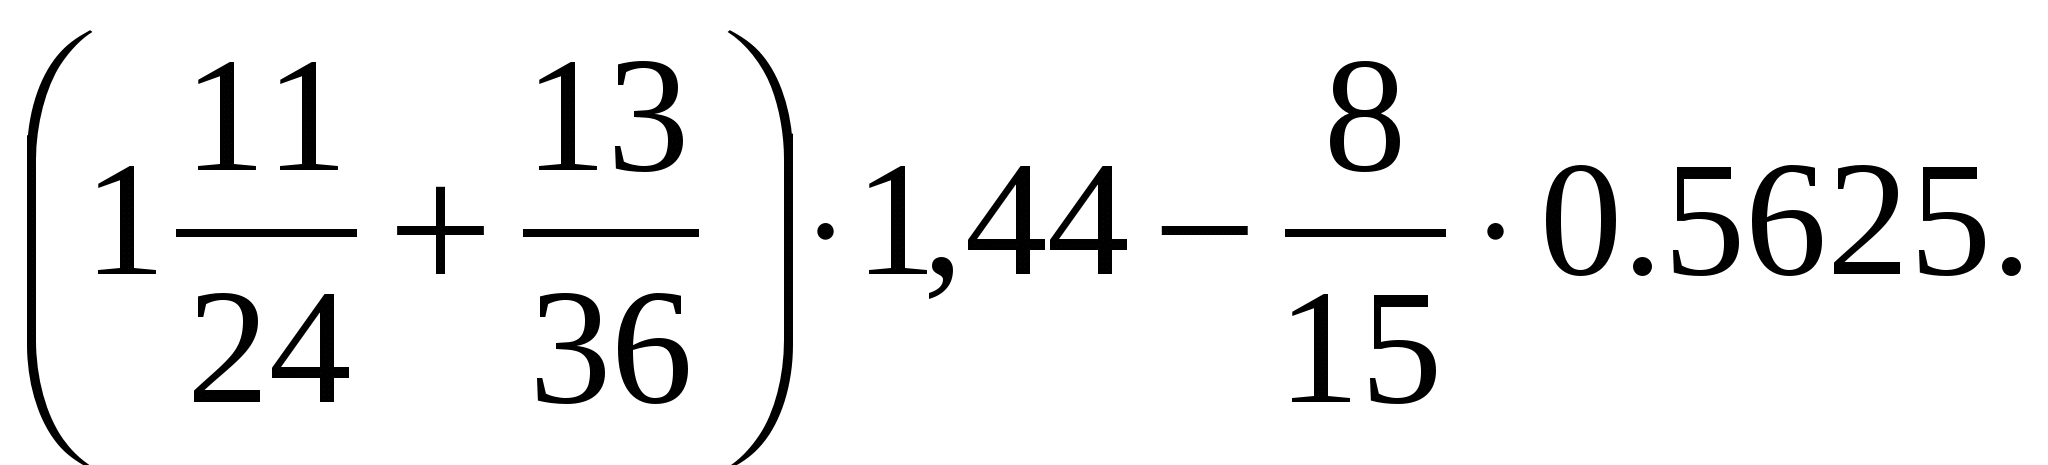 Вычислите 1 11 1 11. (1 11/24+13/36) Х1,44-8/15 х0,5625. 1 11/24+13/36 1.44-8/15 0.5625 Решение. (1 11/24 + 13/36) Х 1,44 - 8/15 Х 0,5625 = 2,32.. Математика 6 класс (1 11/24 +13/36)*1,44-8/15*0,5625.